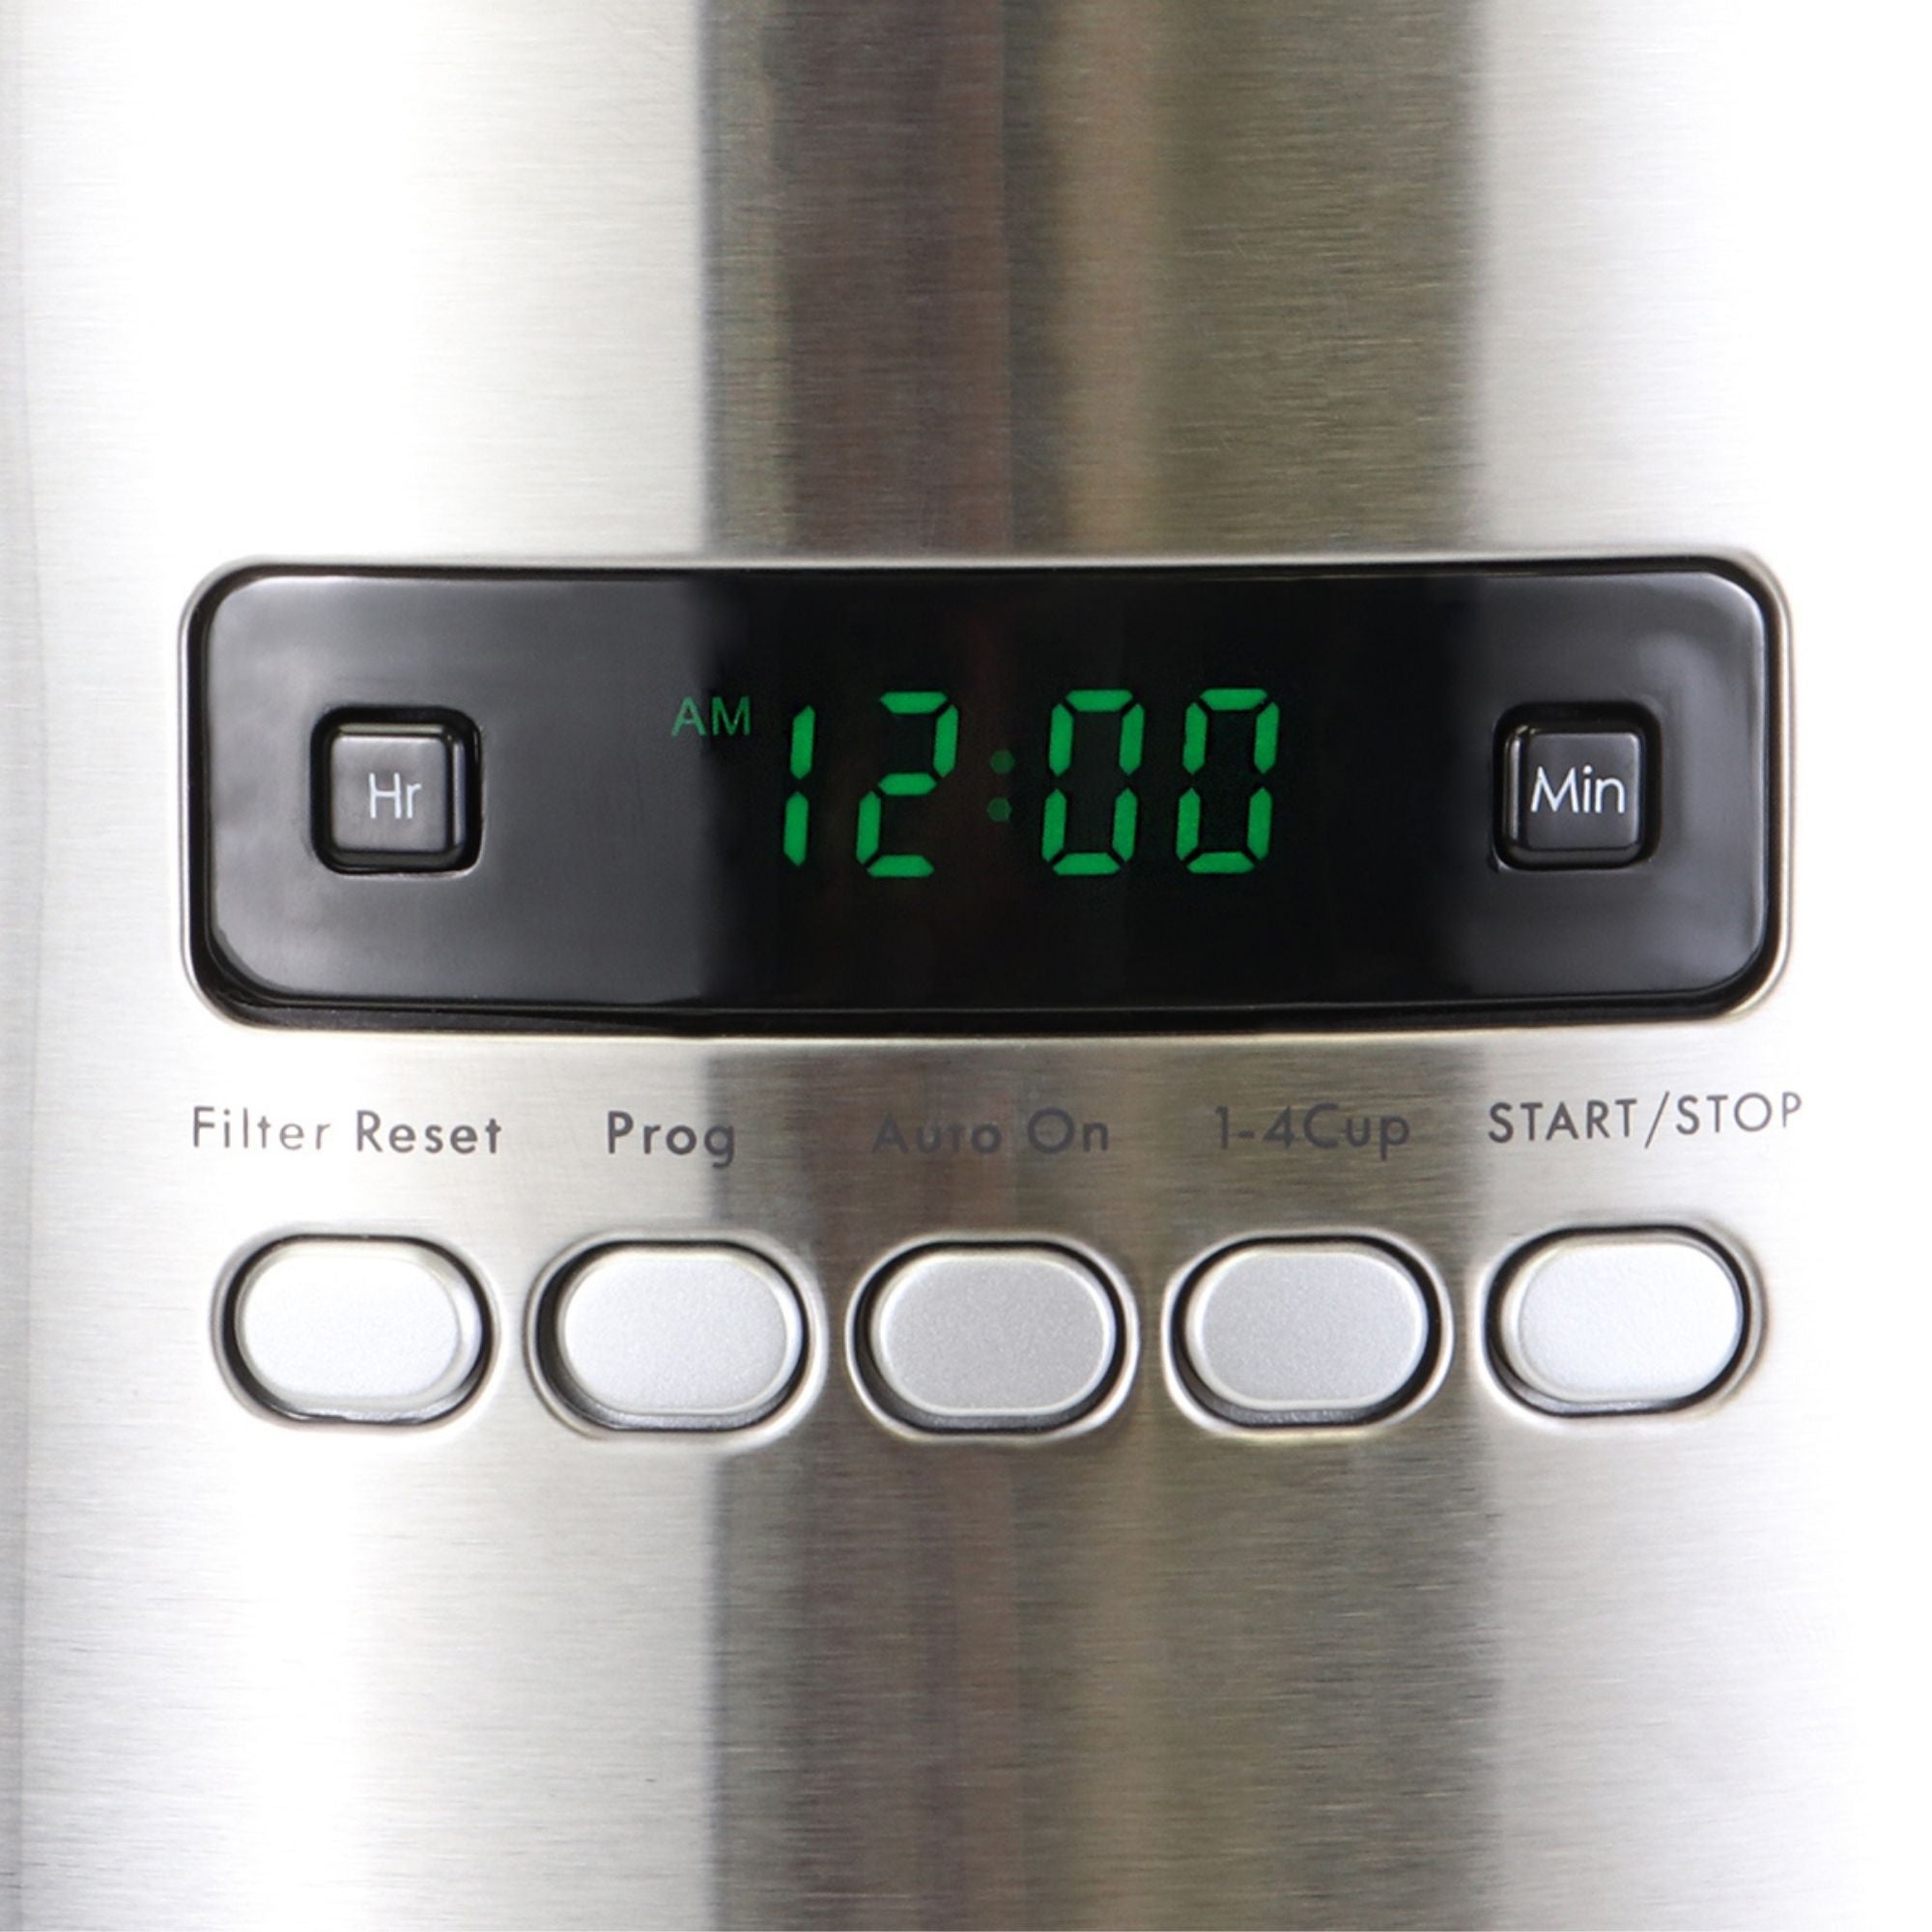 Closeup image of coffeemaker controls and digital display